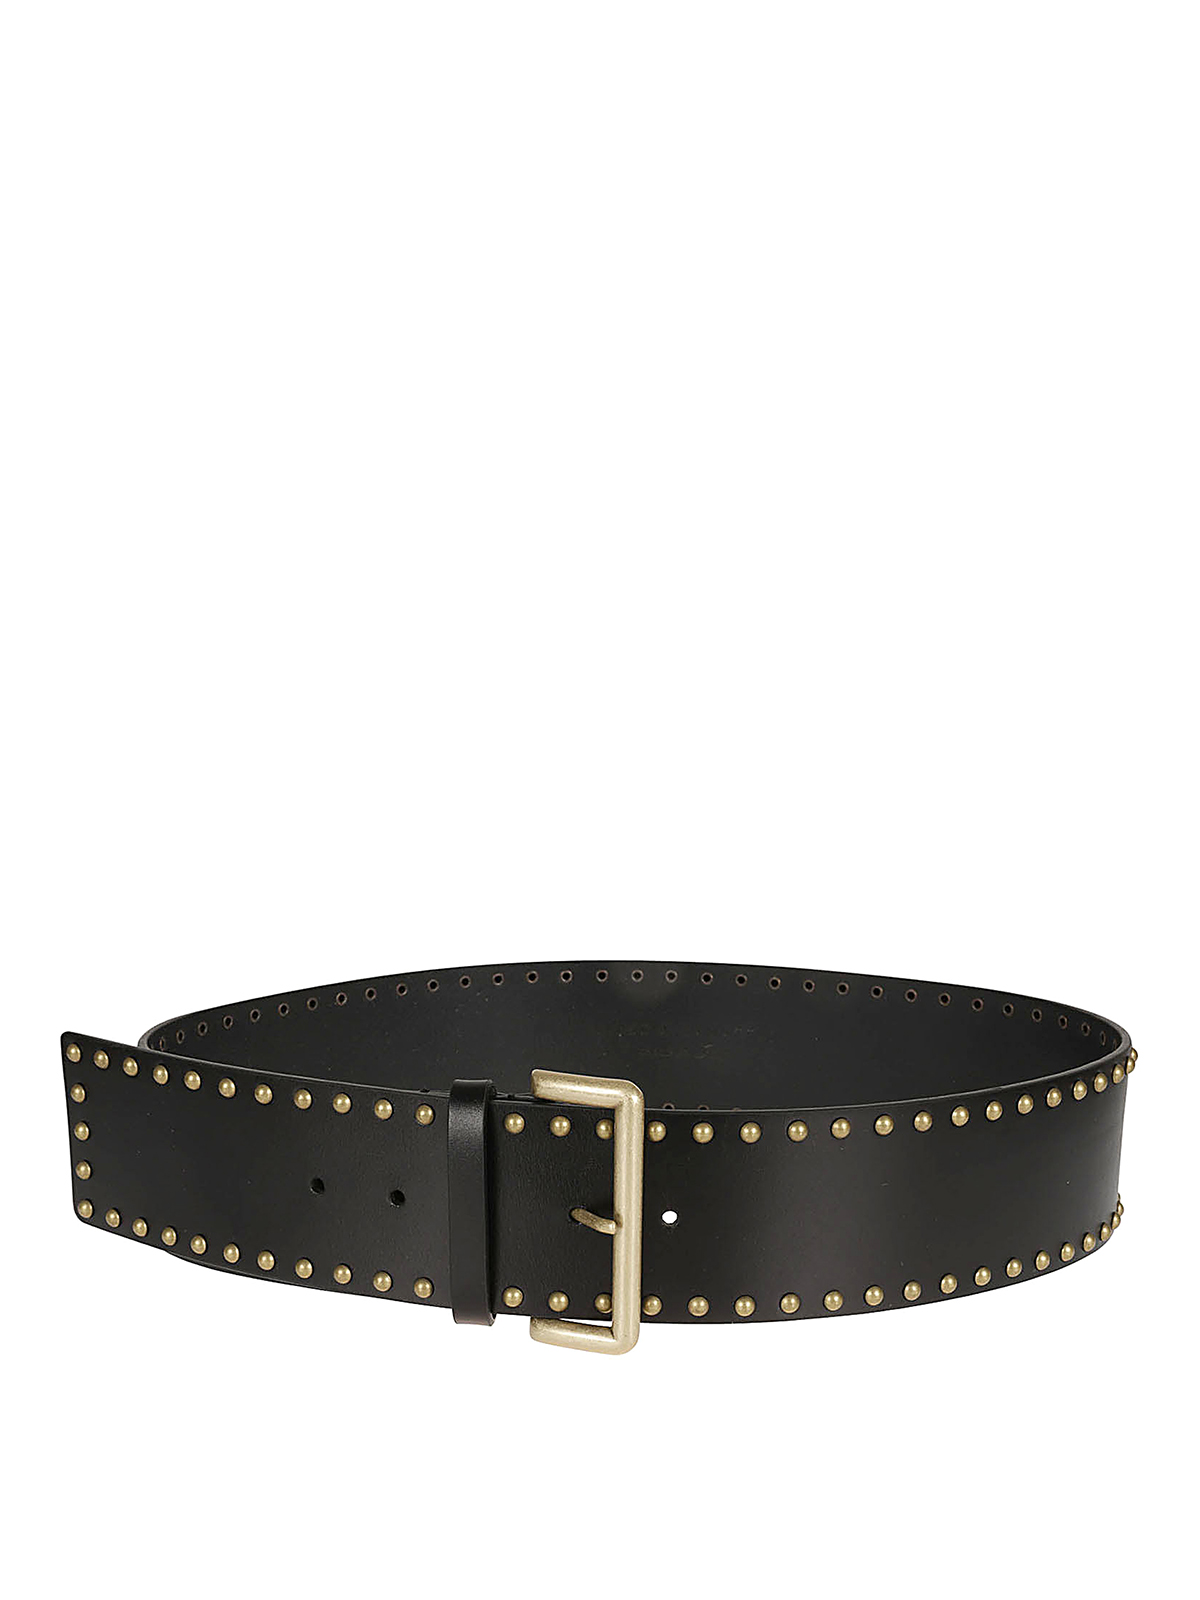 Alessia Zamattio Studded Leather Belt In Black